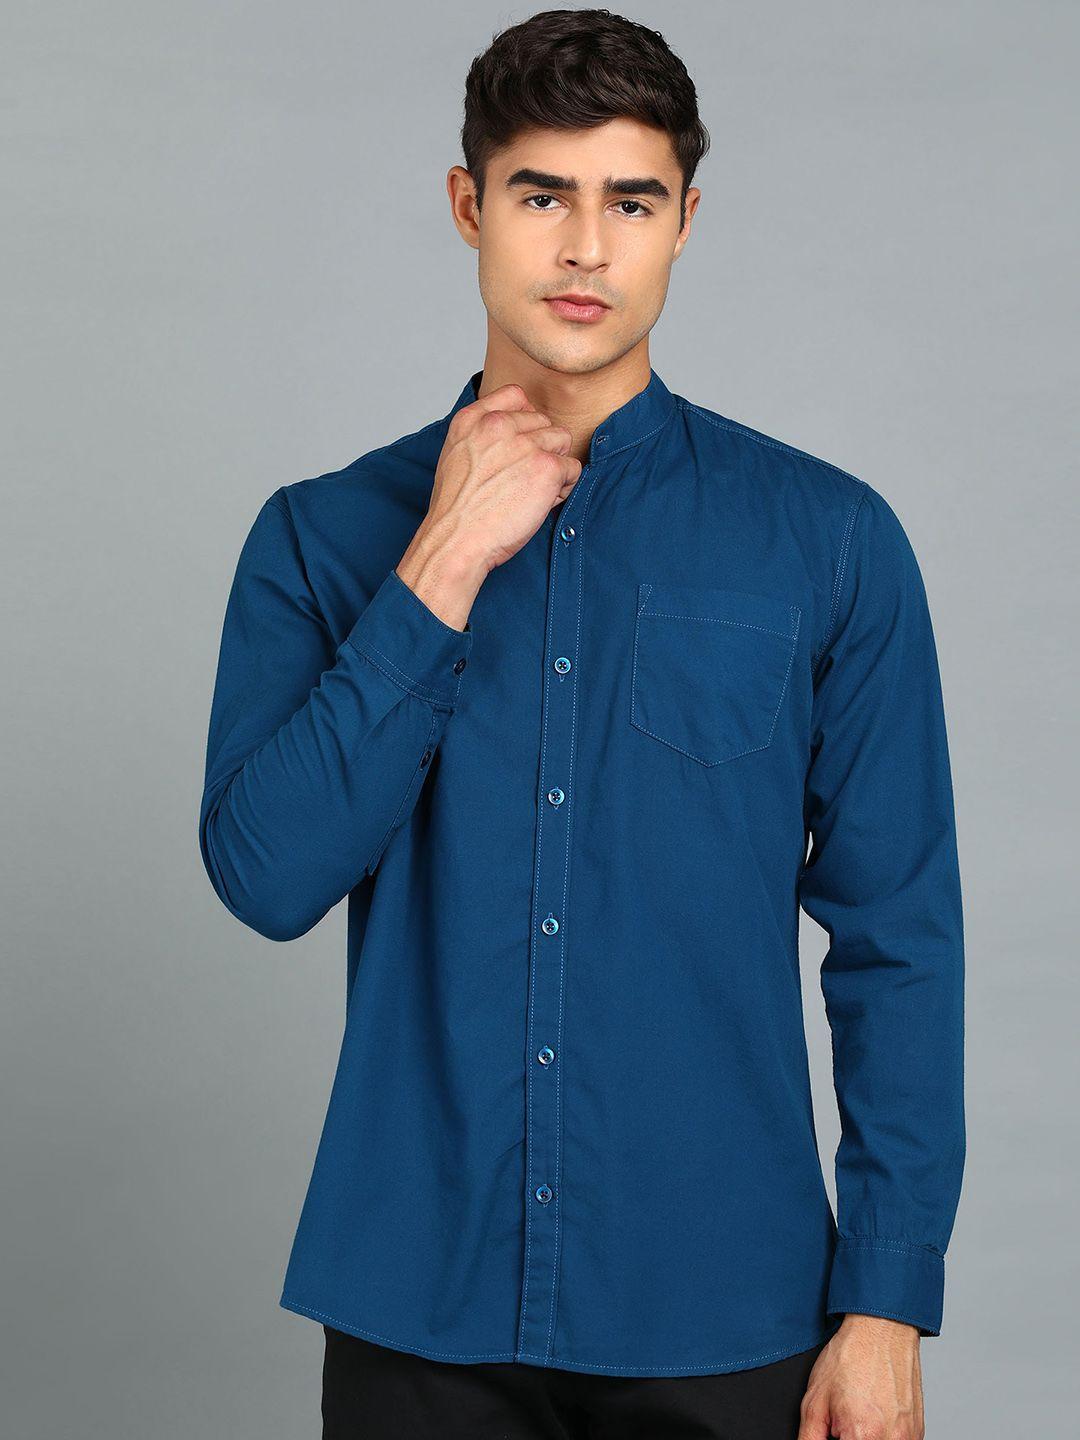 urbano fashion mandarin collar slim fit opaque pure cotton casual shirt